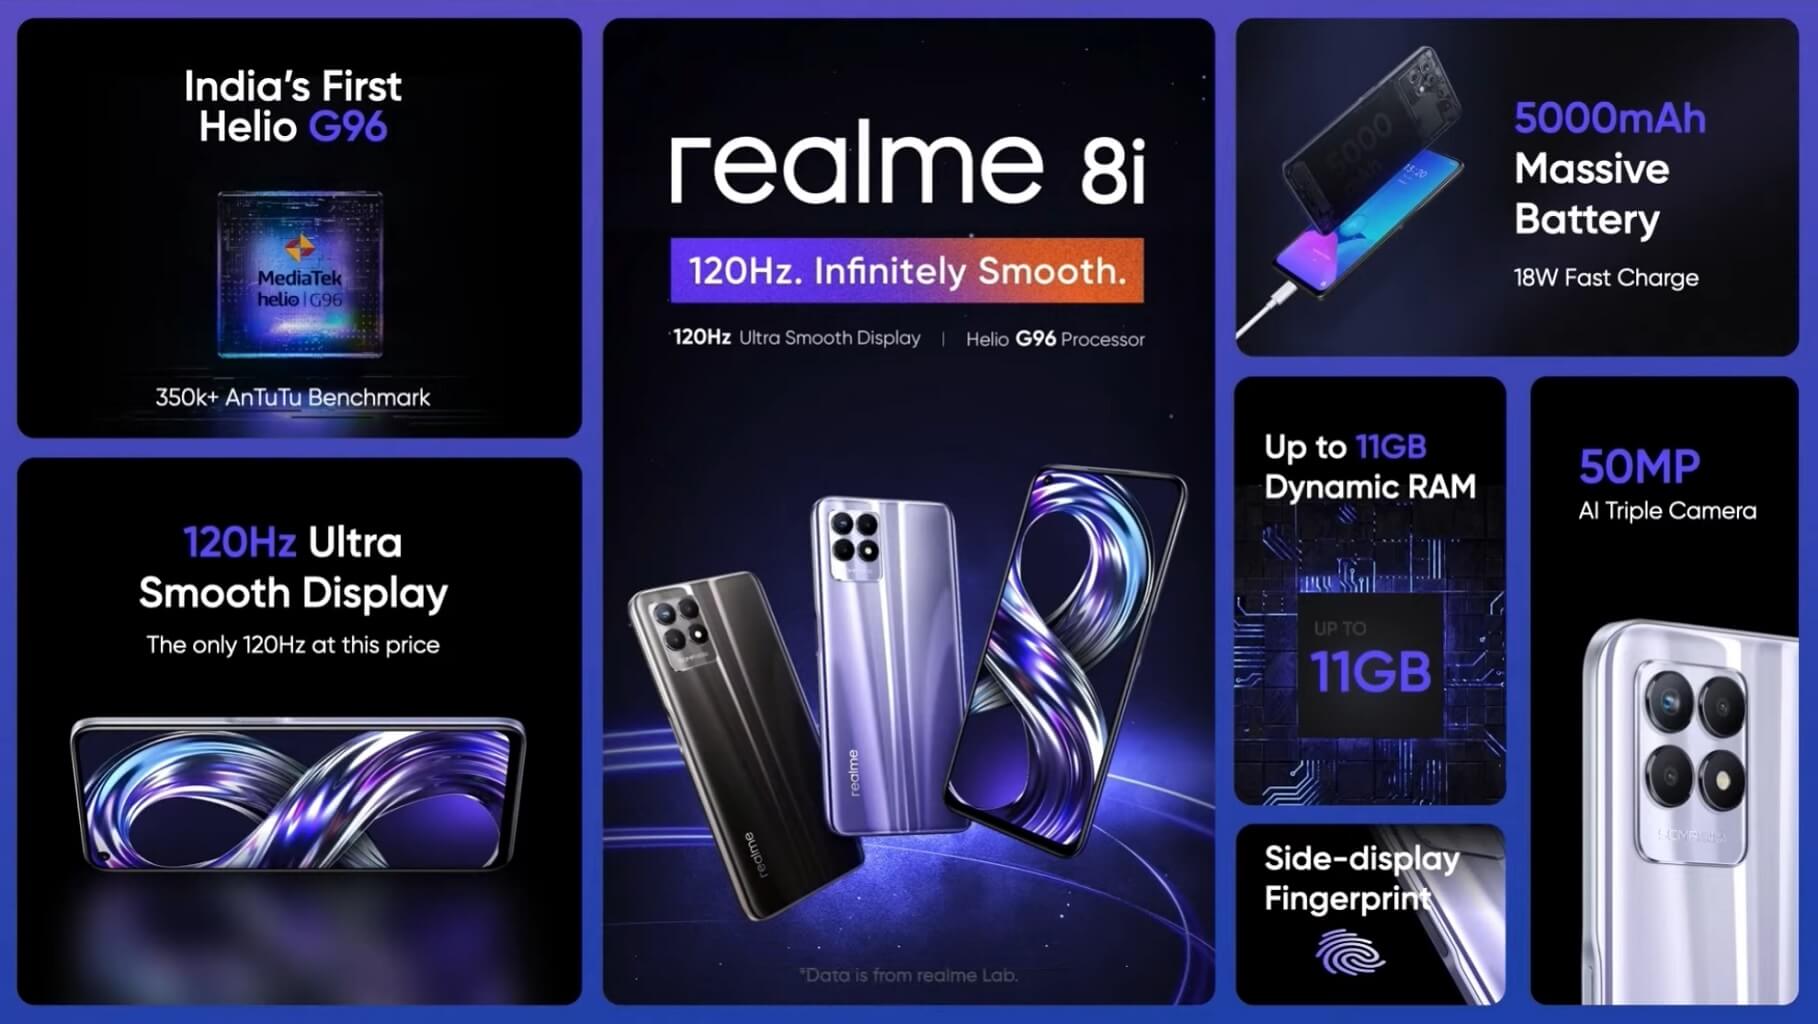 Realme 8i features